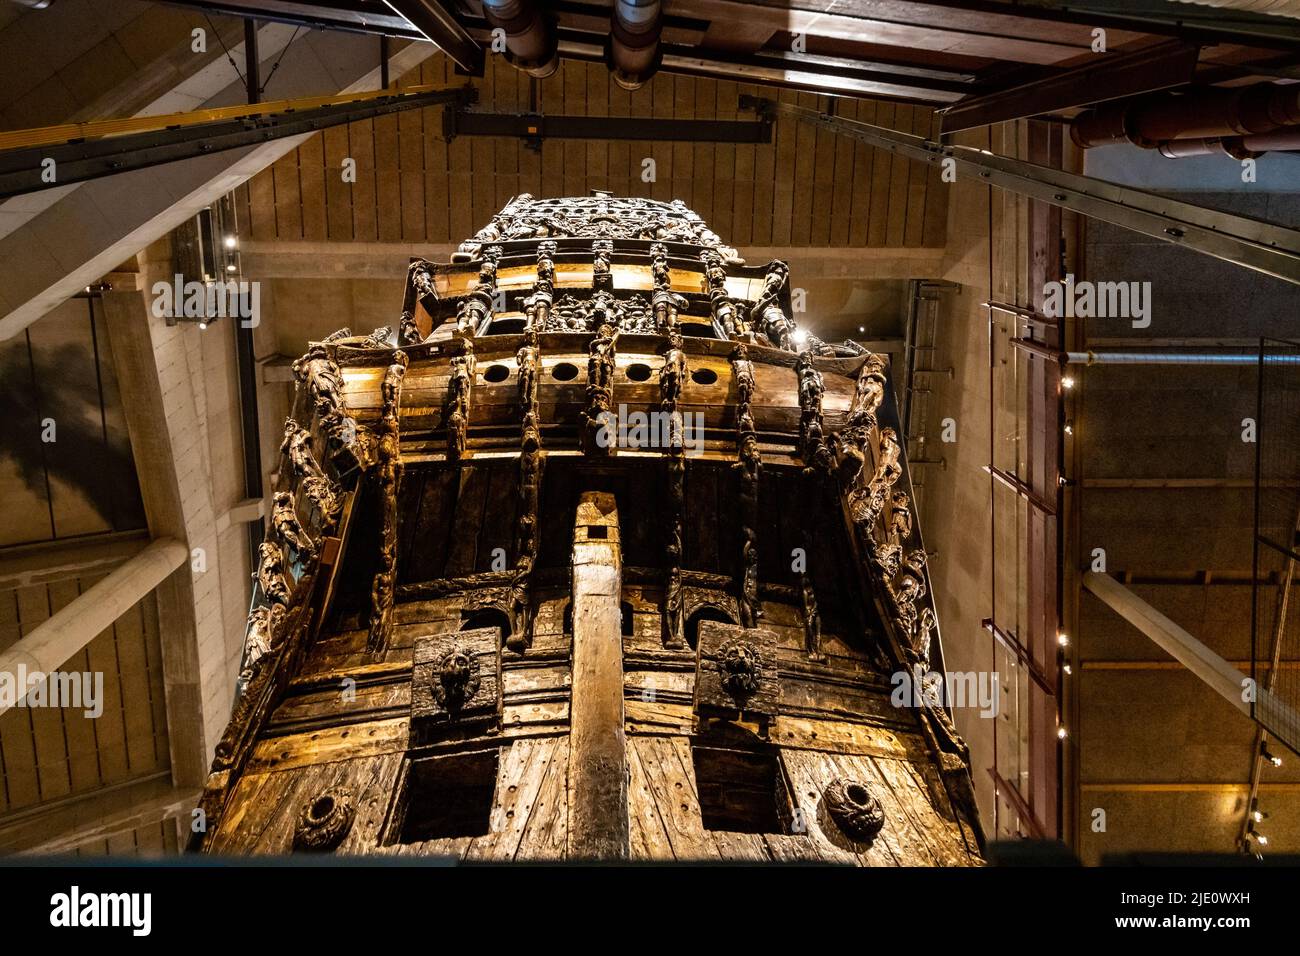 Stern of Vasa - old wooden Swedish warship in Stockholm Stock Photo